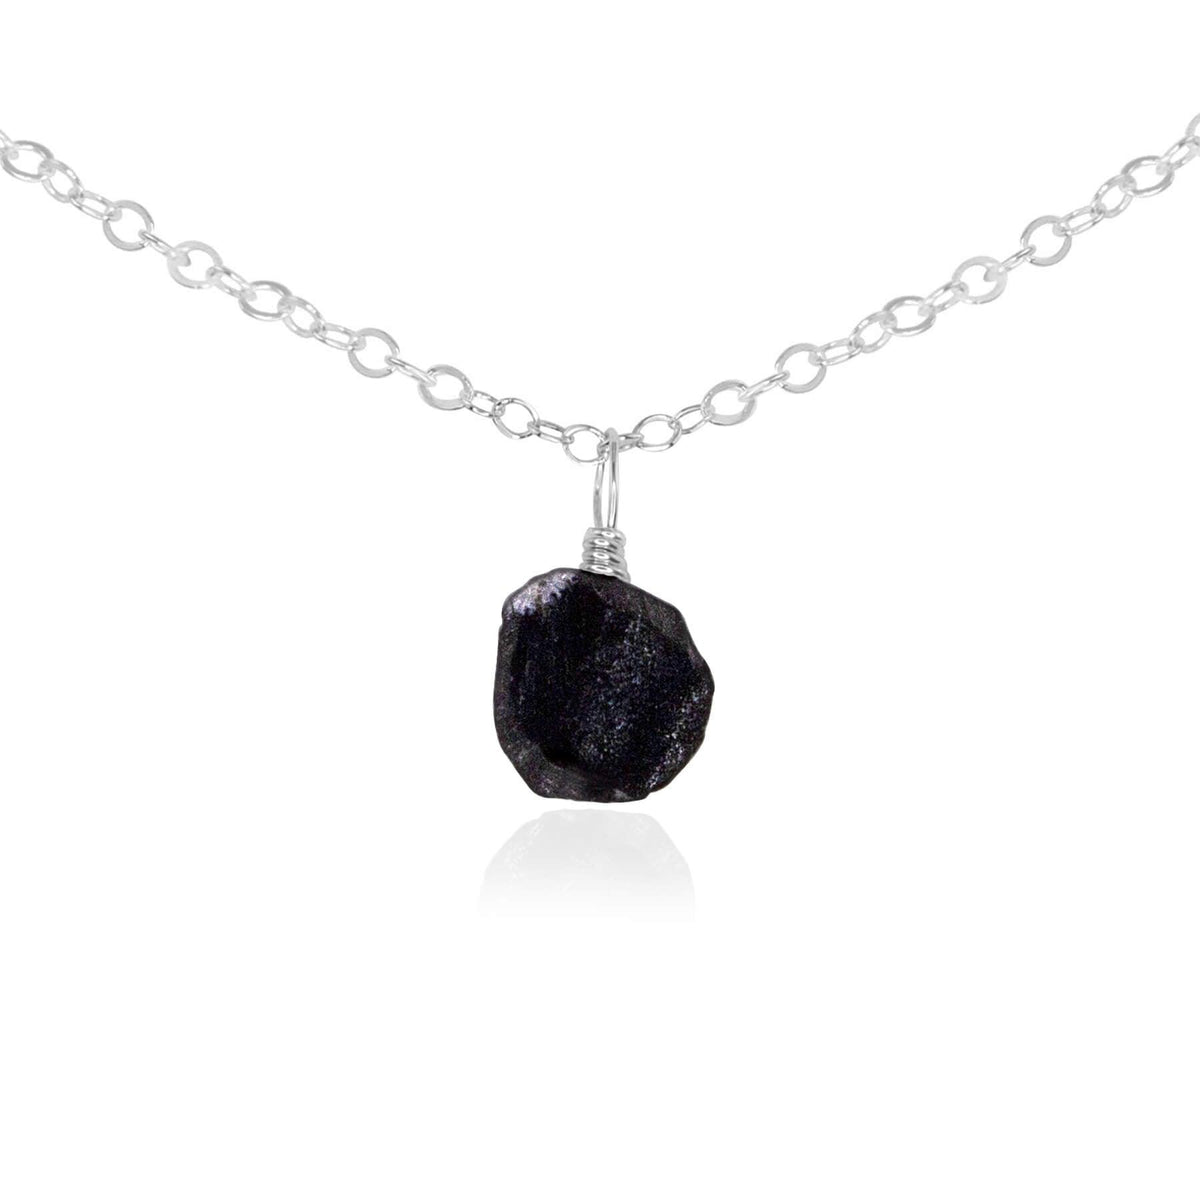 Tiny Rough Obsidian Gemstone Pendant Choker - Tiny Rough Obsidian Gemstone Pendant Choker - Sterling Silver / Cable - Luna Tide Handmade Crystal Jewellery